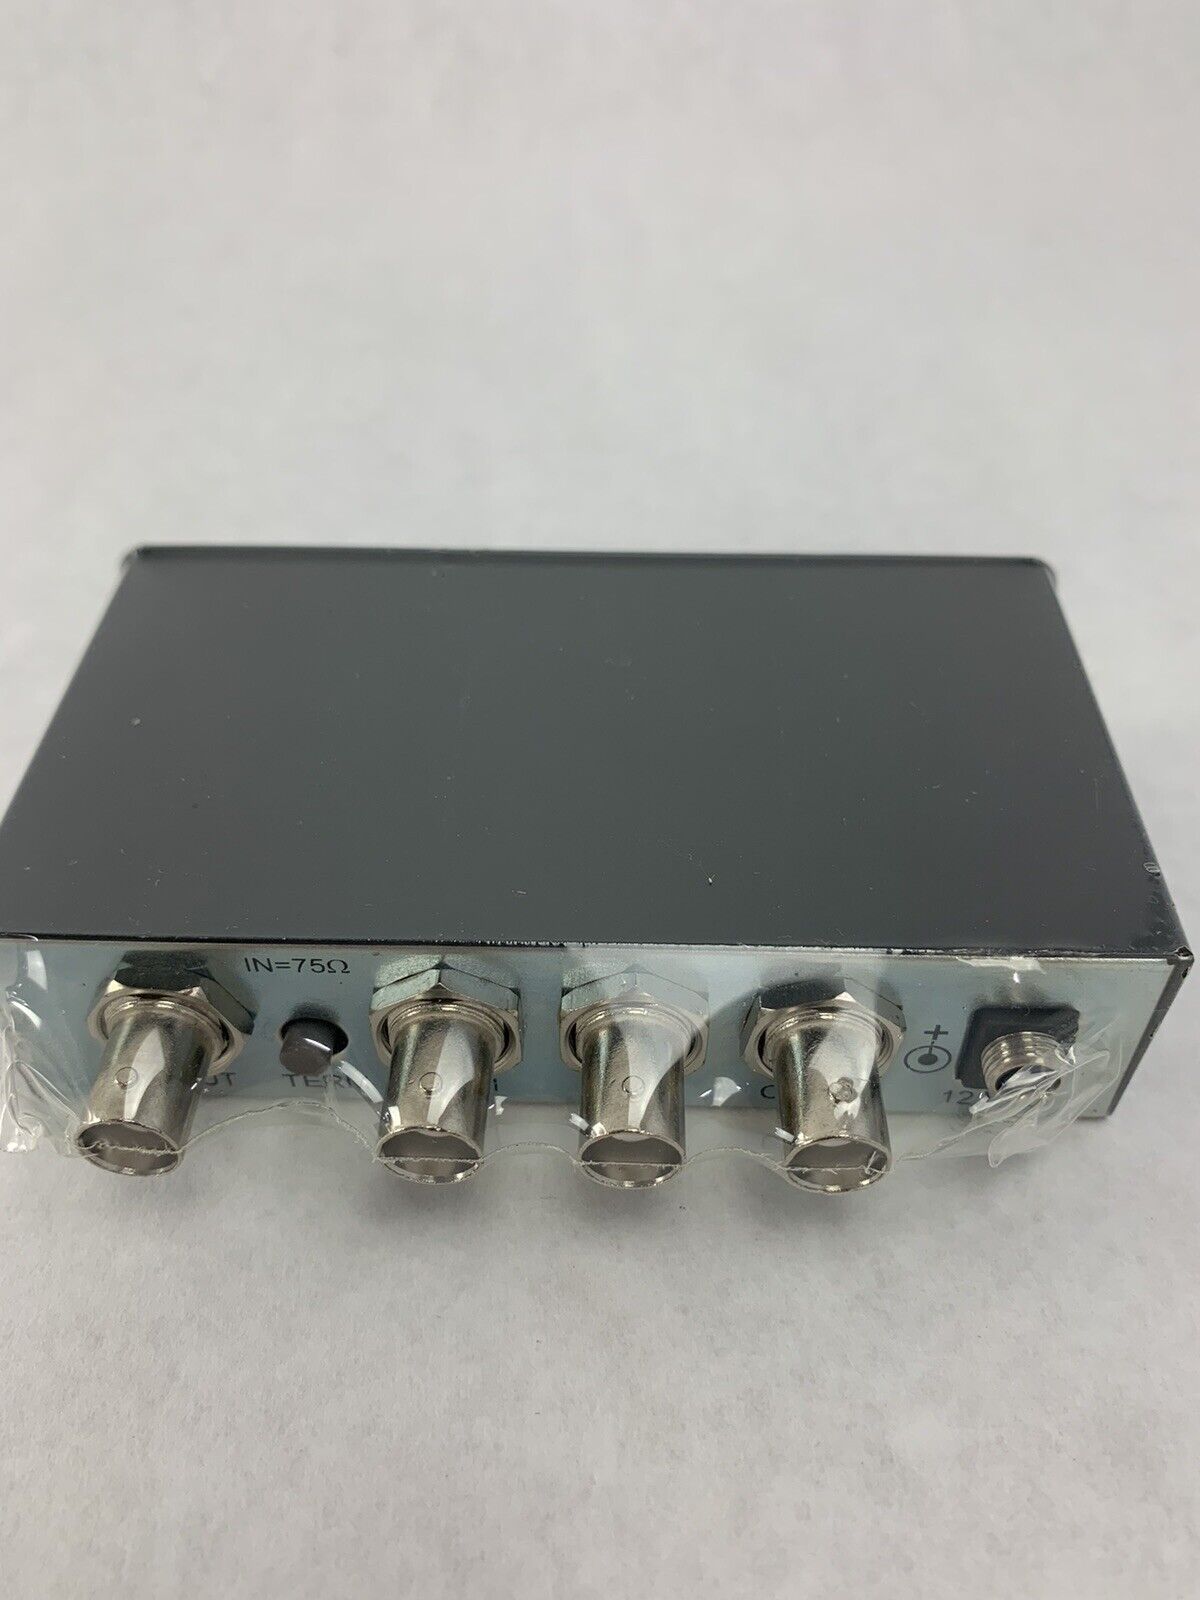 CVG-3VXL/U 1x3 Composite Video Distributor Amplifier Unit